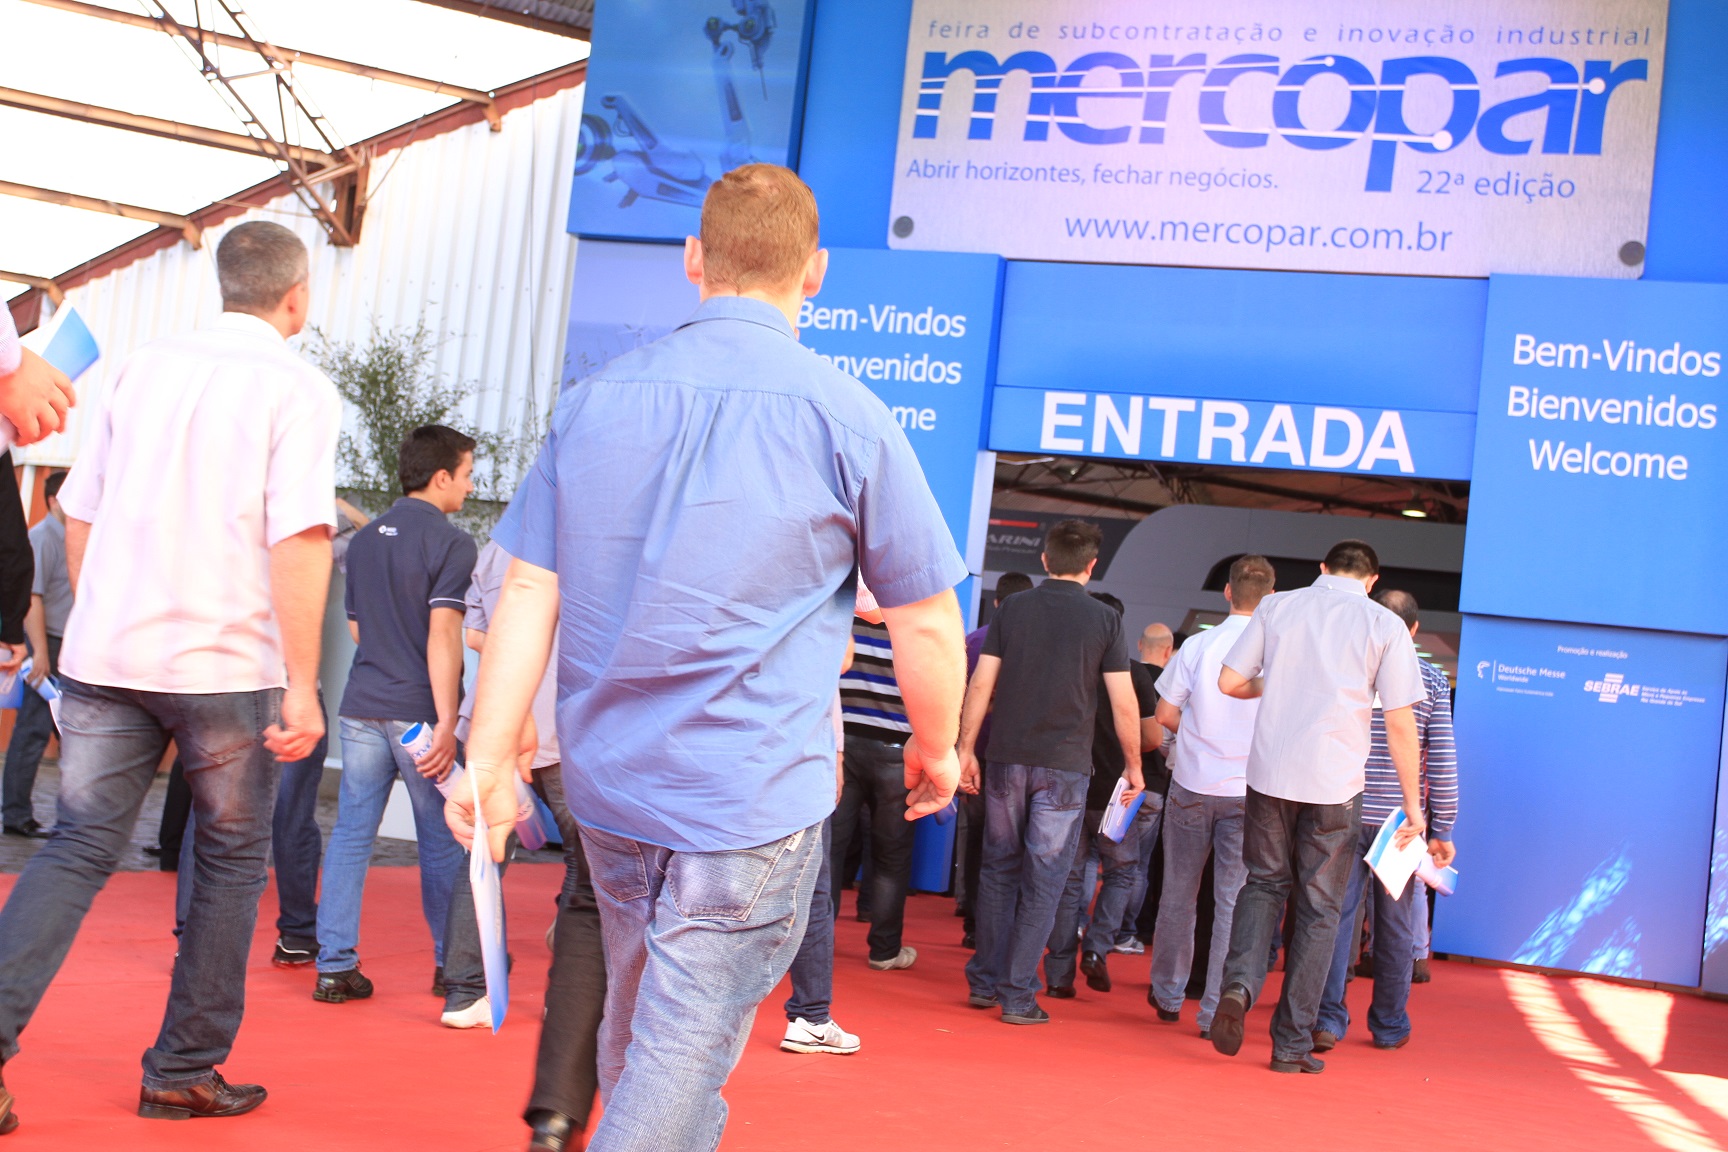 Mercopar 2013 had positive business outlook